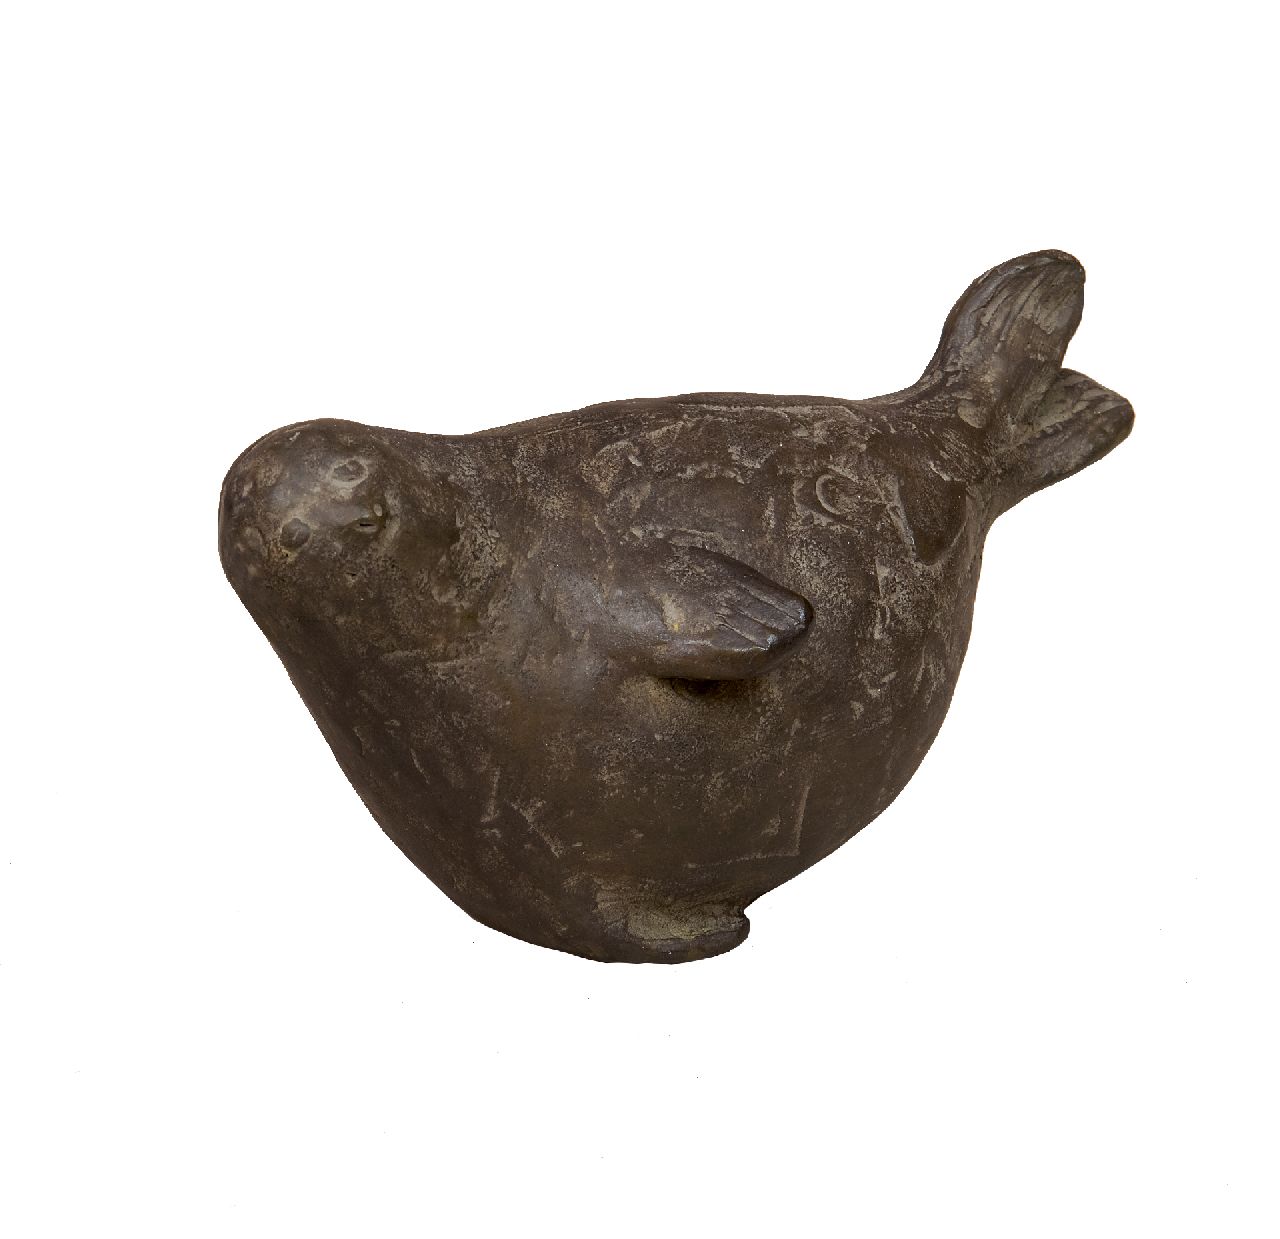 Hemert E. van | Evert van Hemert, Seal, patinated bronze 8.0 x 15.5 cm, signed with monogram on the belly and executed 2017